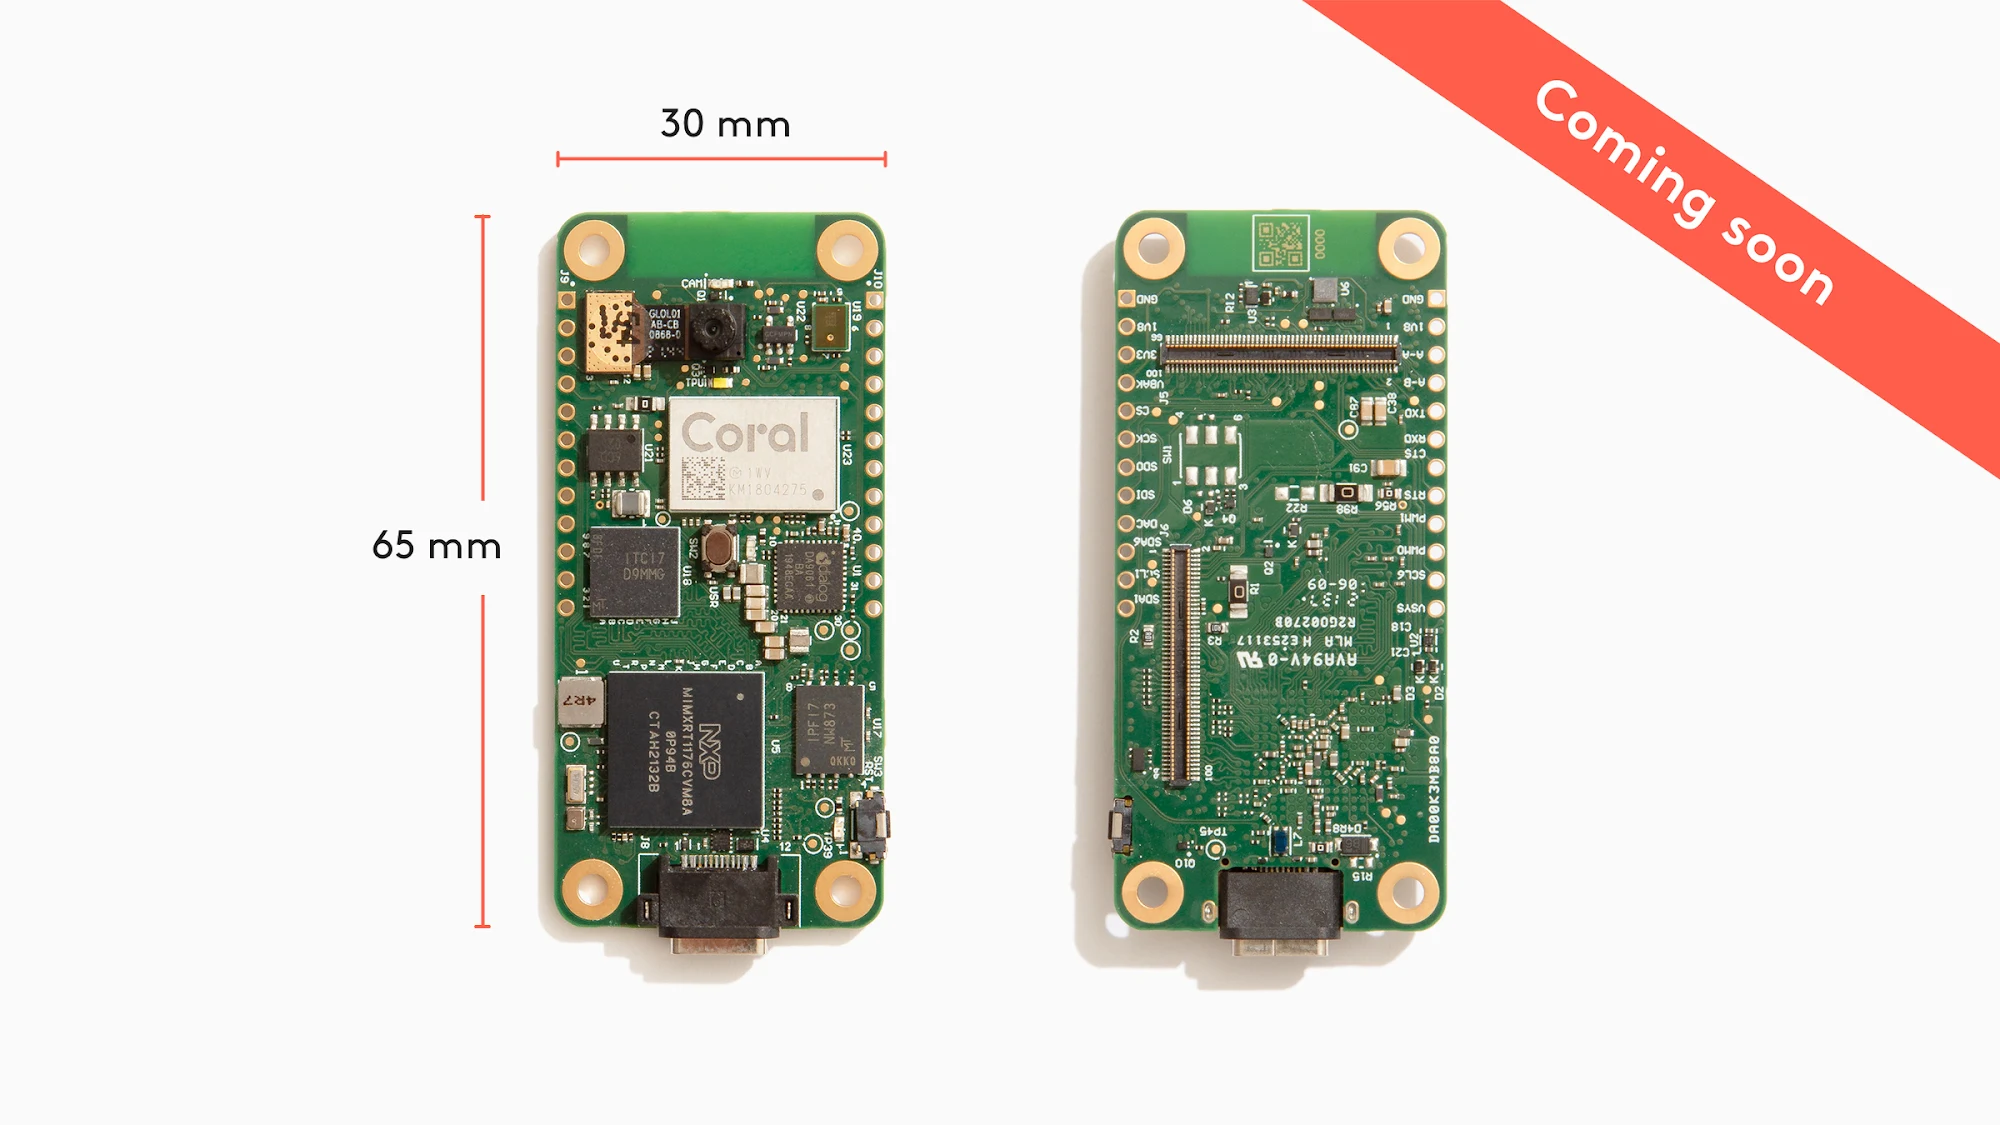 Dev Board Micro - A microcontroller board with a camera, mic, and